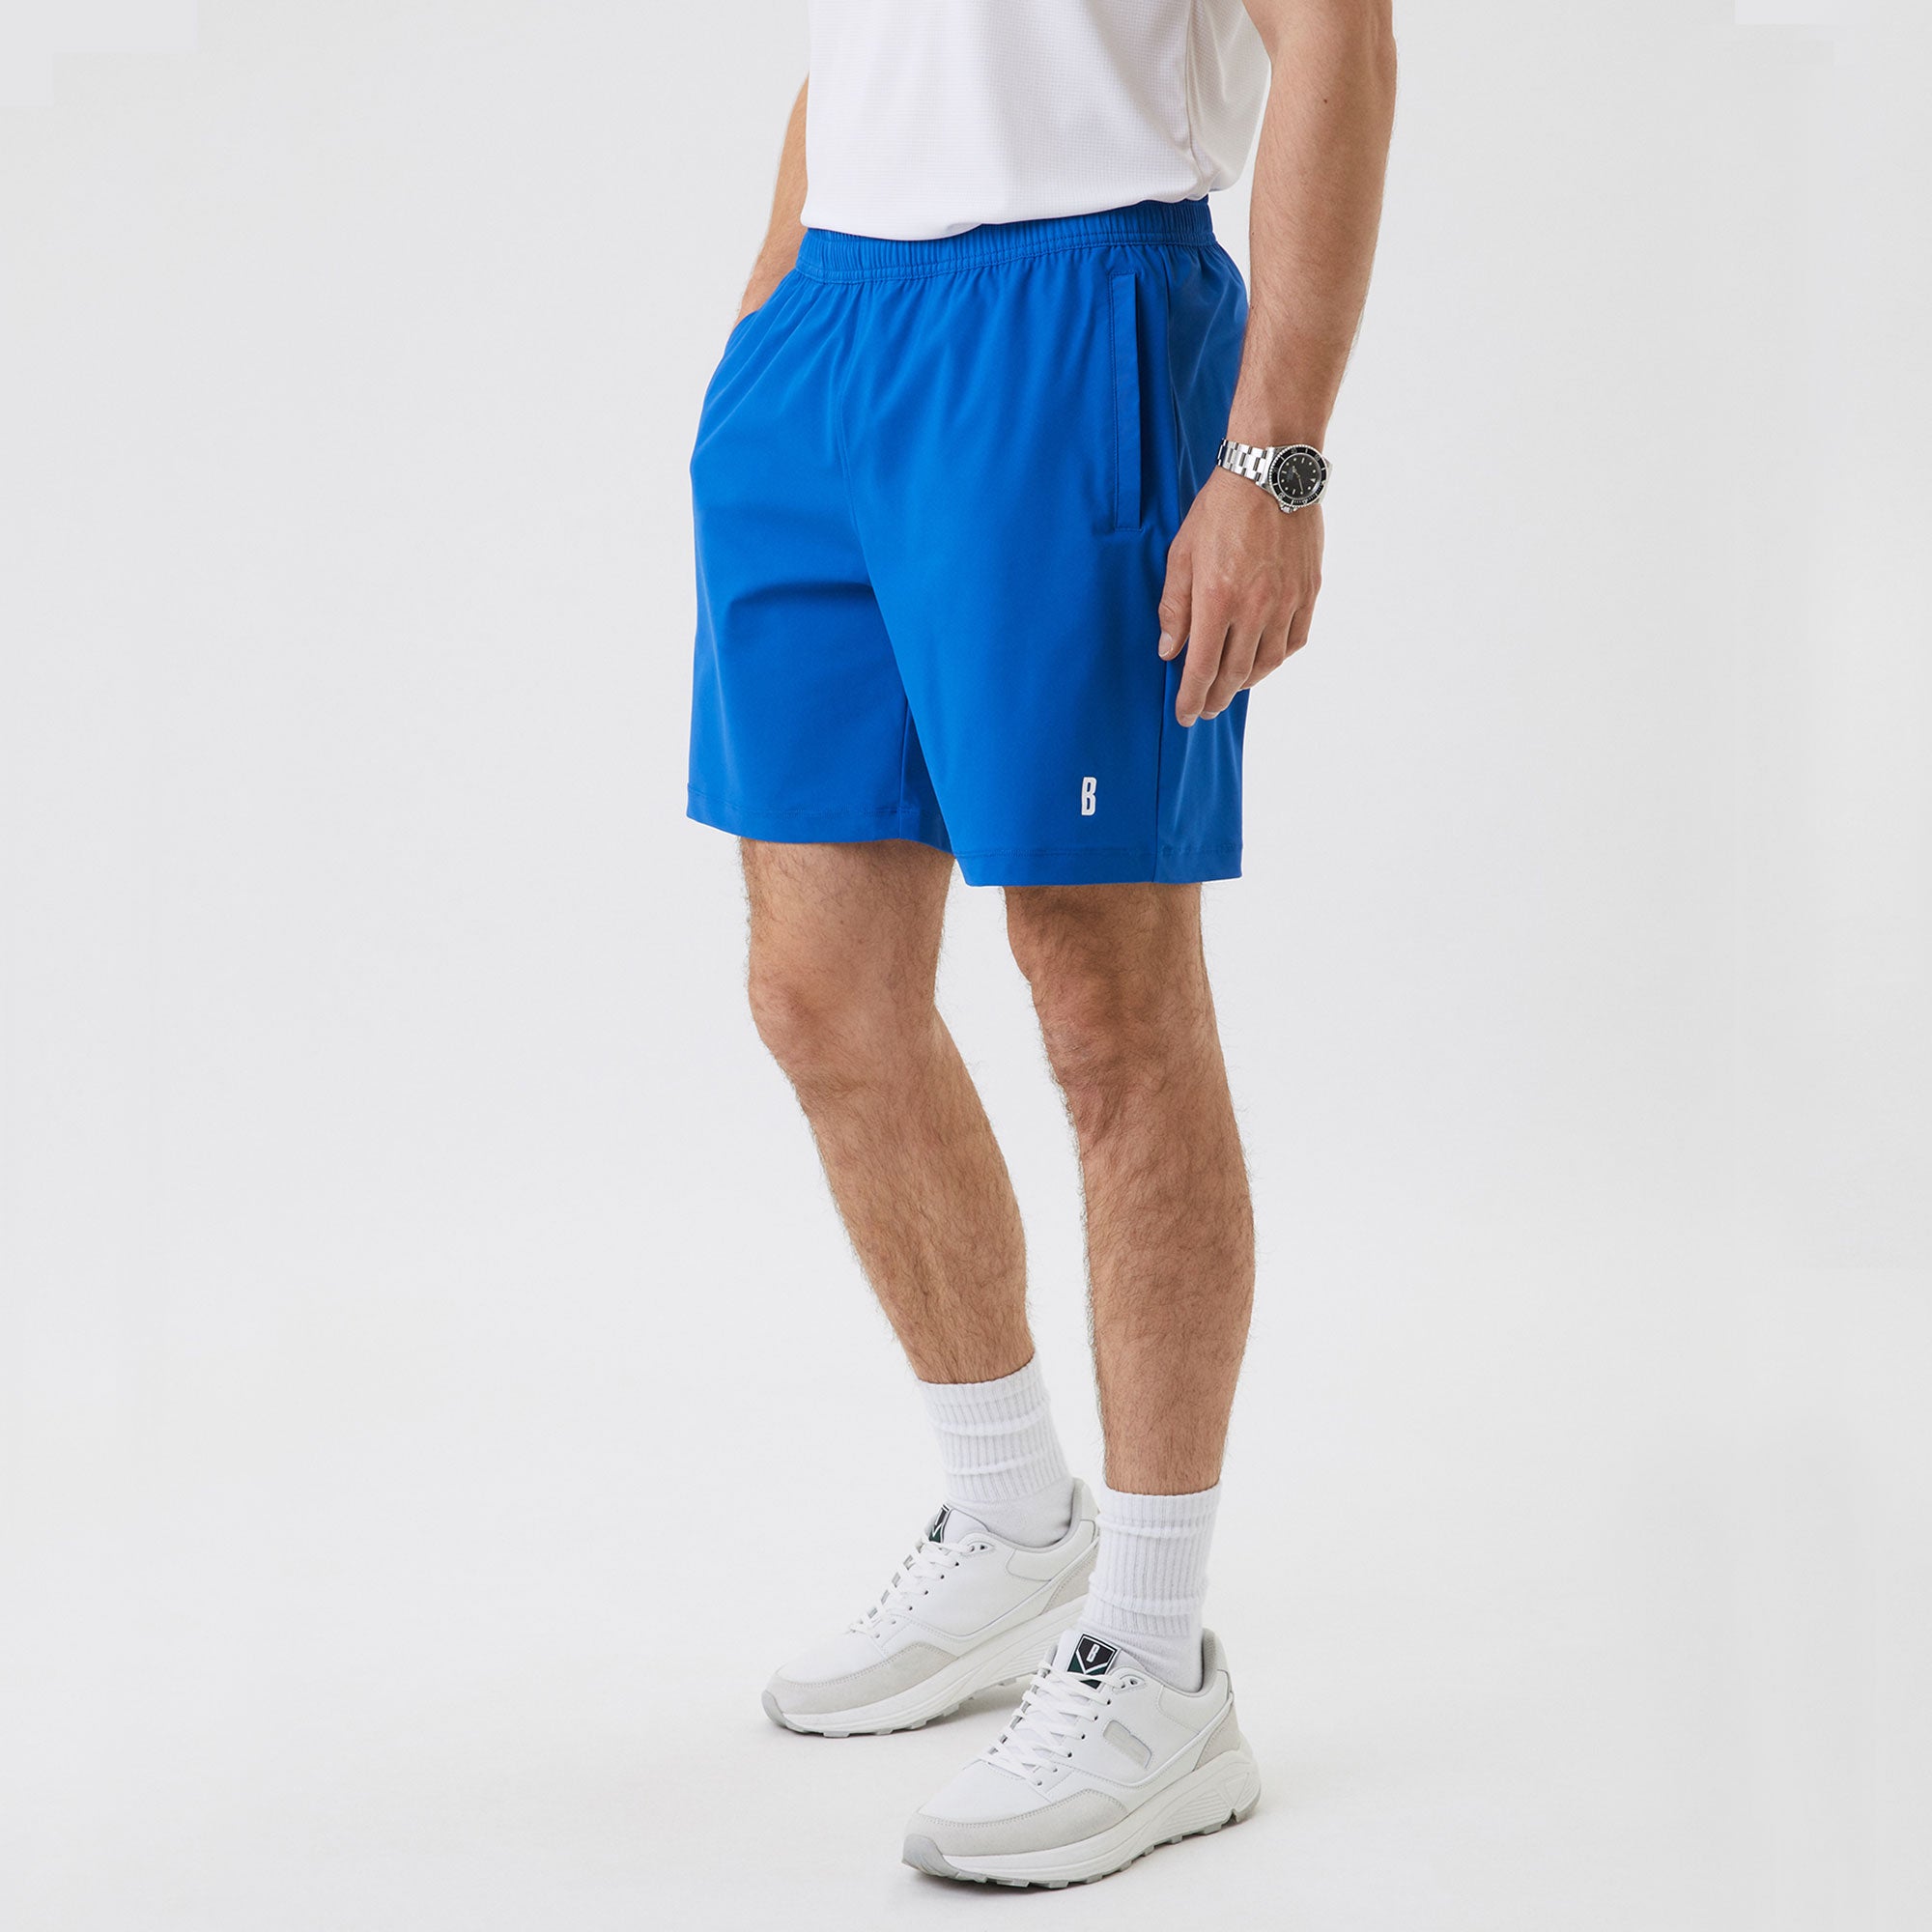 Björn Borg Ace Men's Tennis Pants